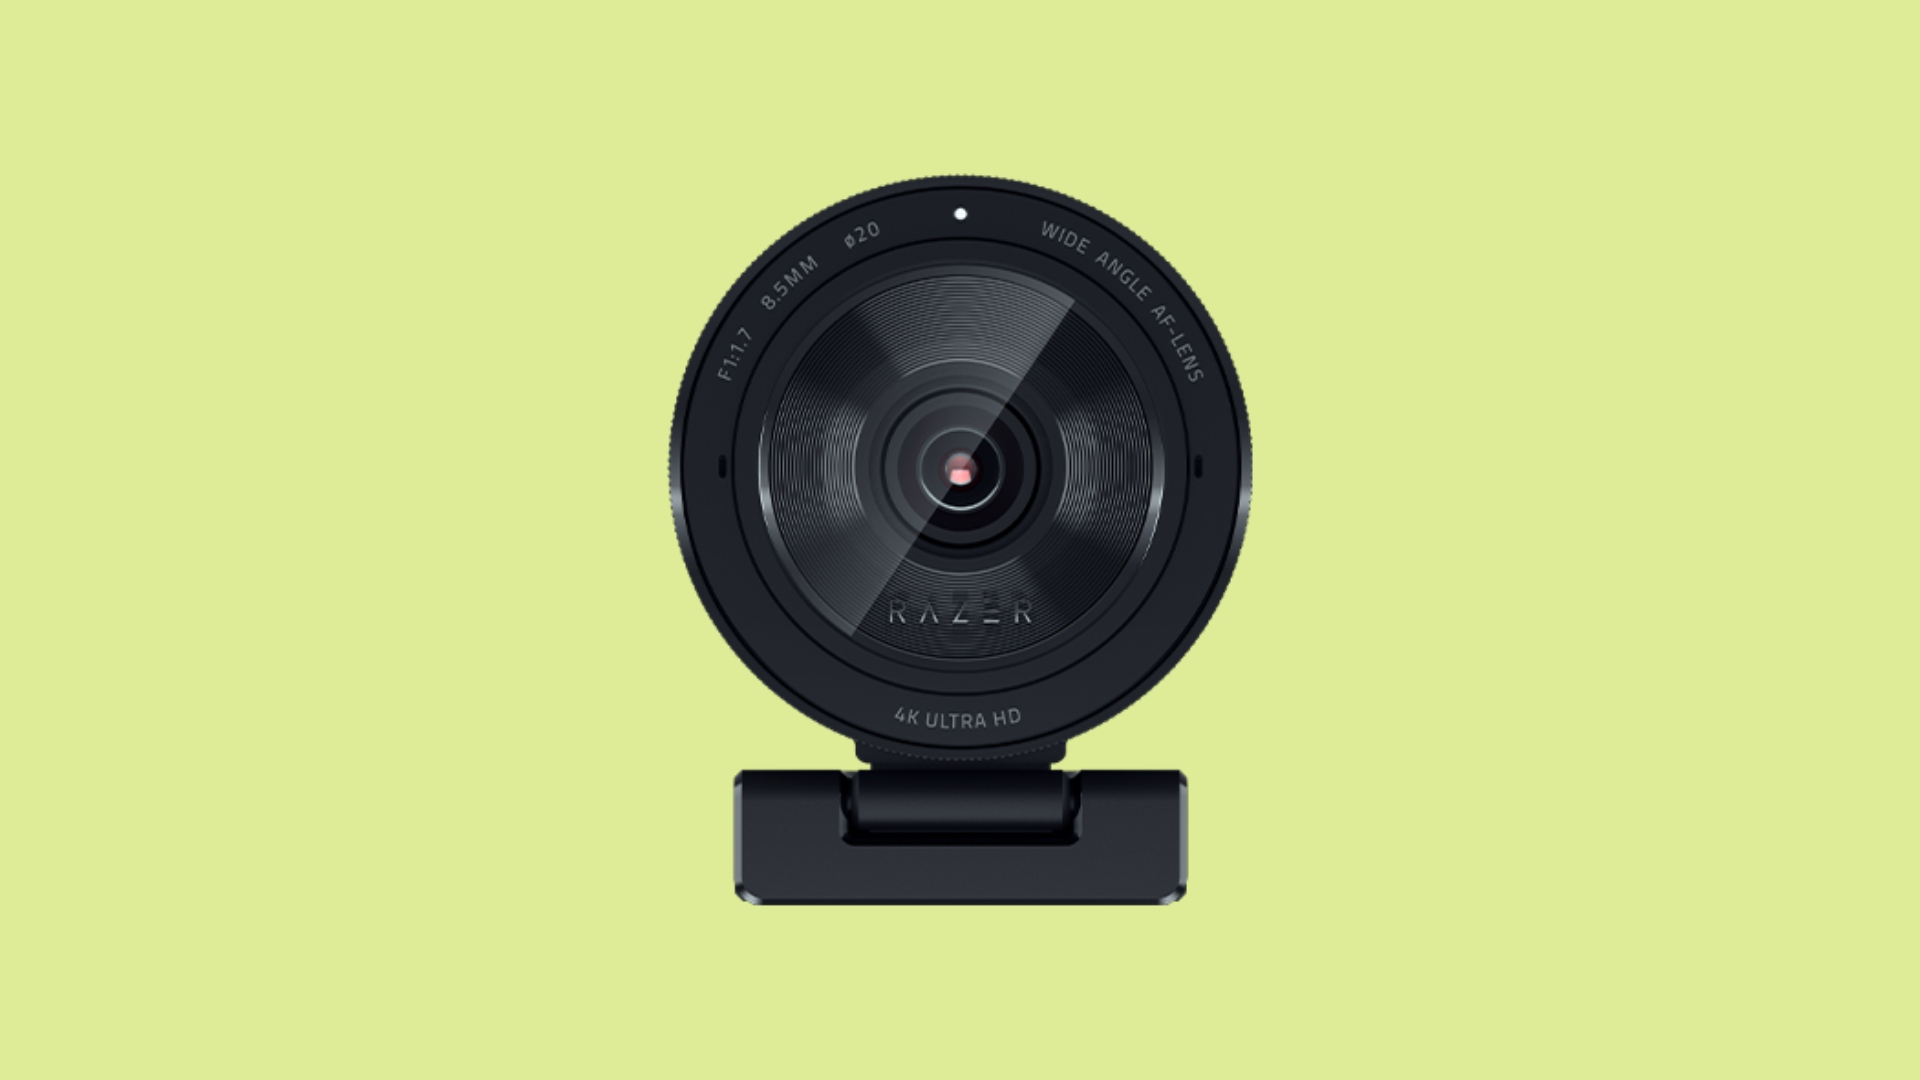 Tech Battle Logitech Streamcam vs Logitech C920s Pro Webcam